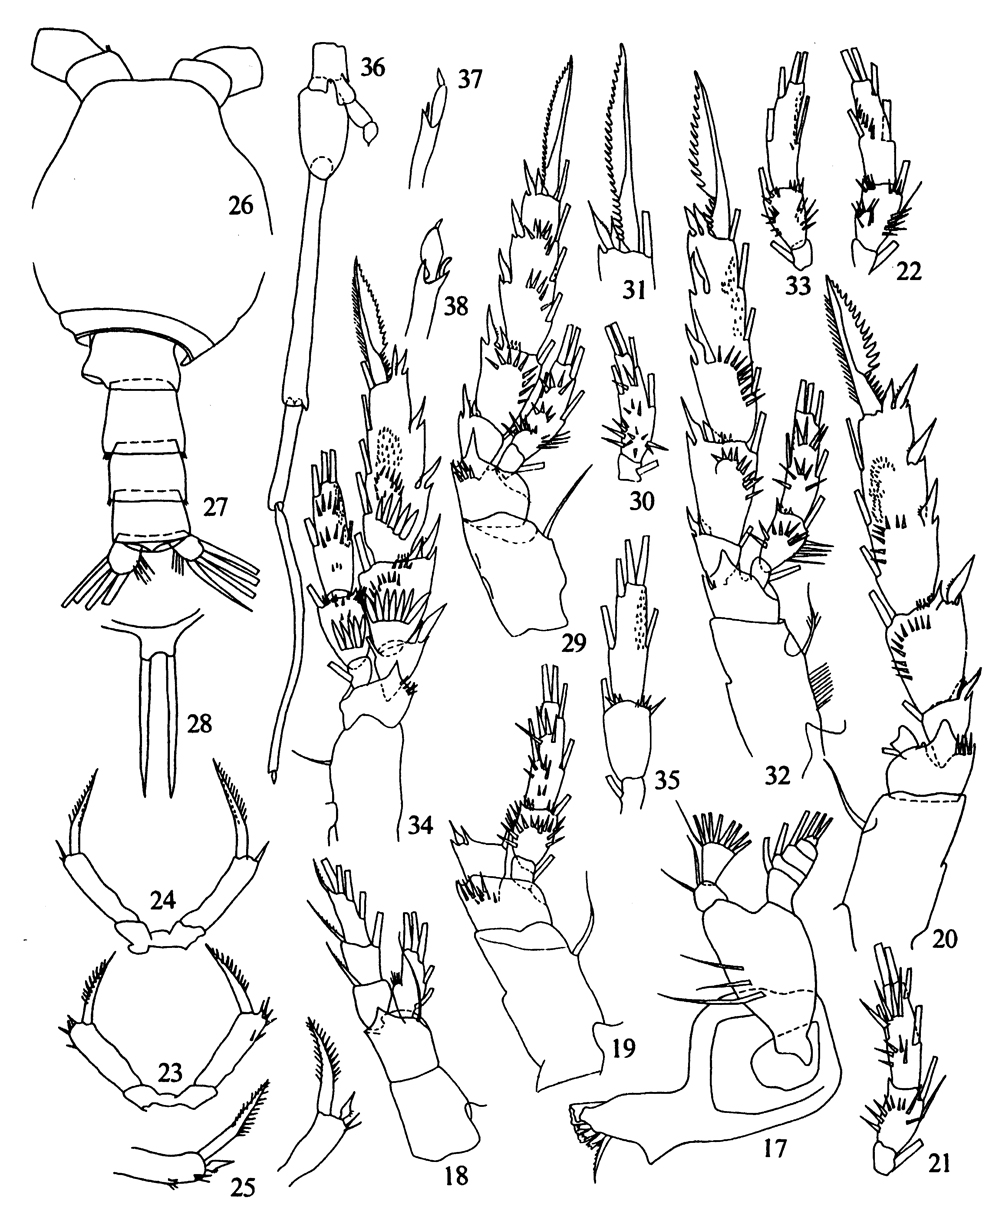 Species Scolecitrichopsis tenuipes - Plate 6 of morphological figures